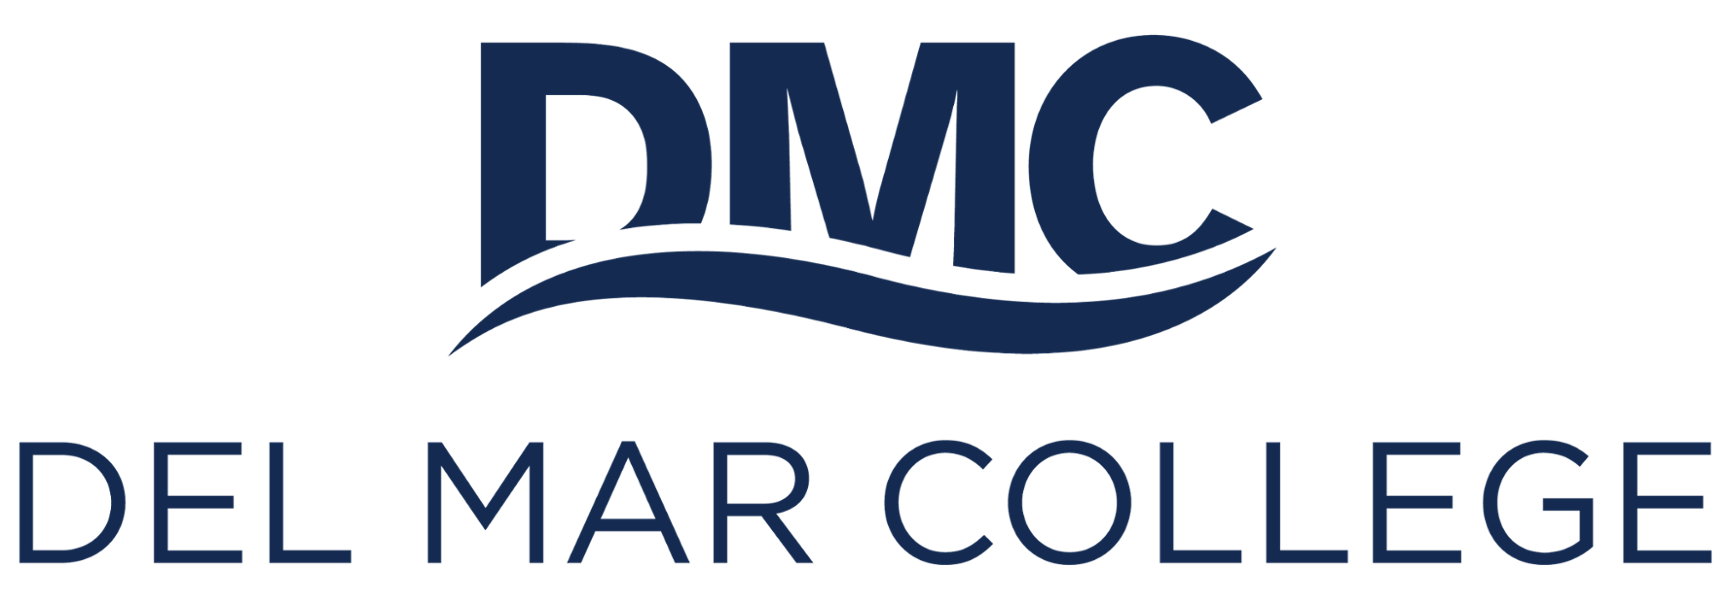 Del Mar College Blue Logo